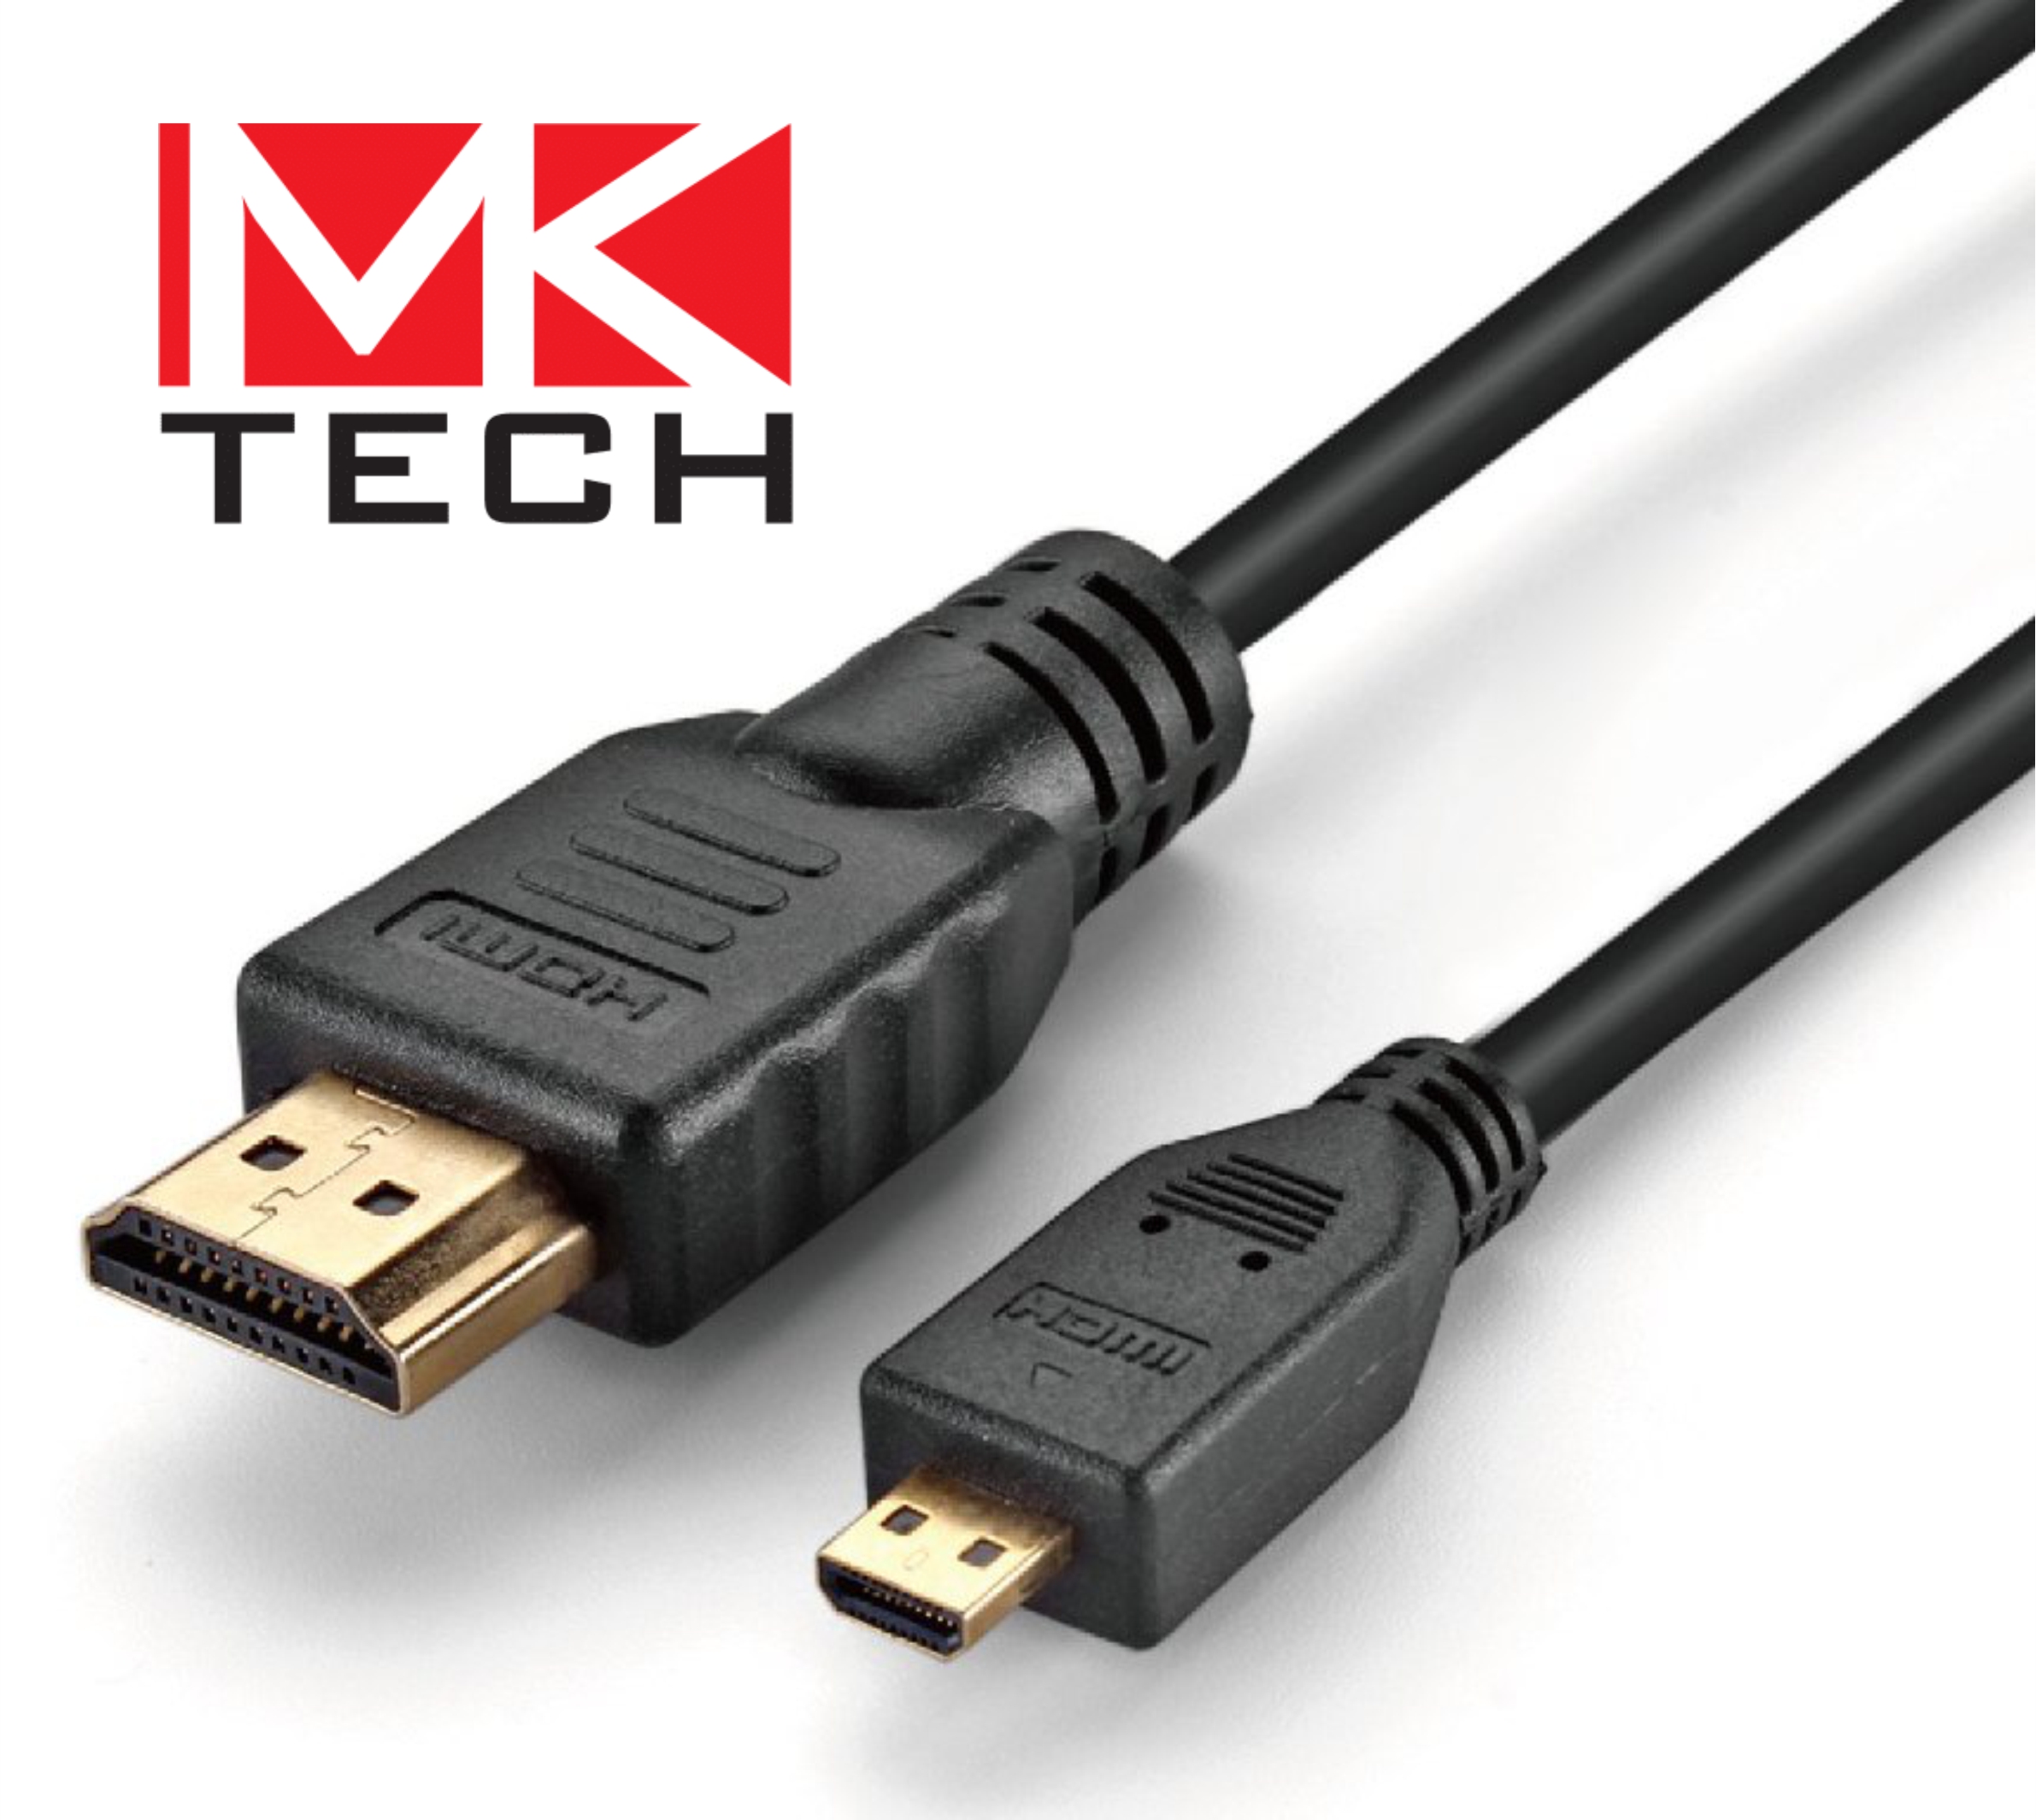 HDMI to HDMI Micro (type D) 1.8m MKTECH